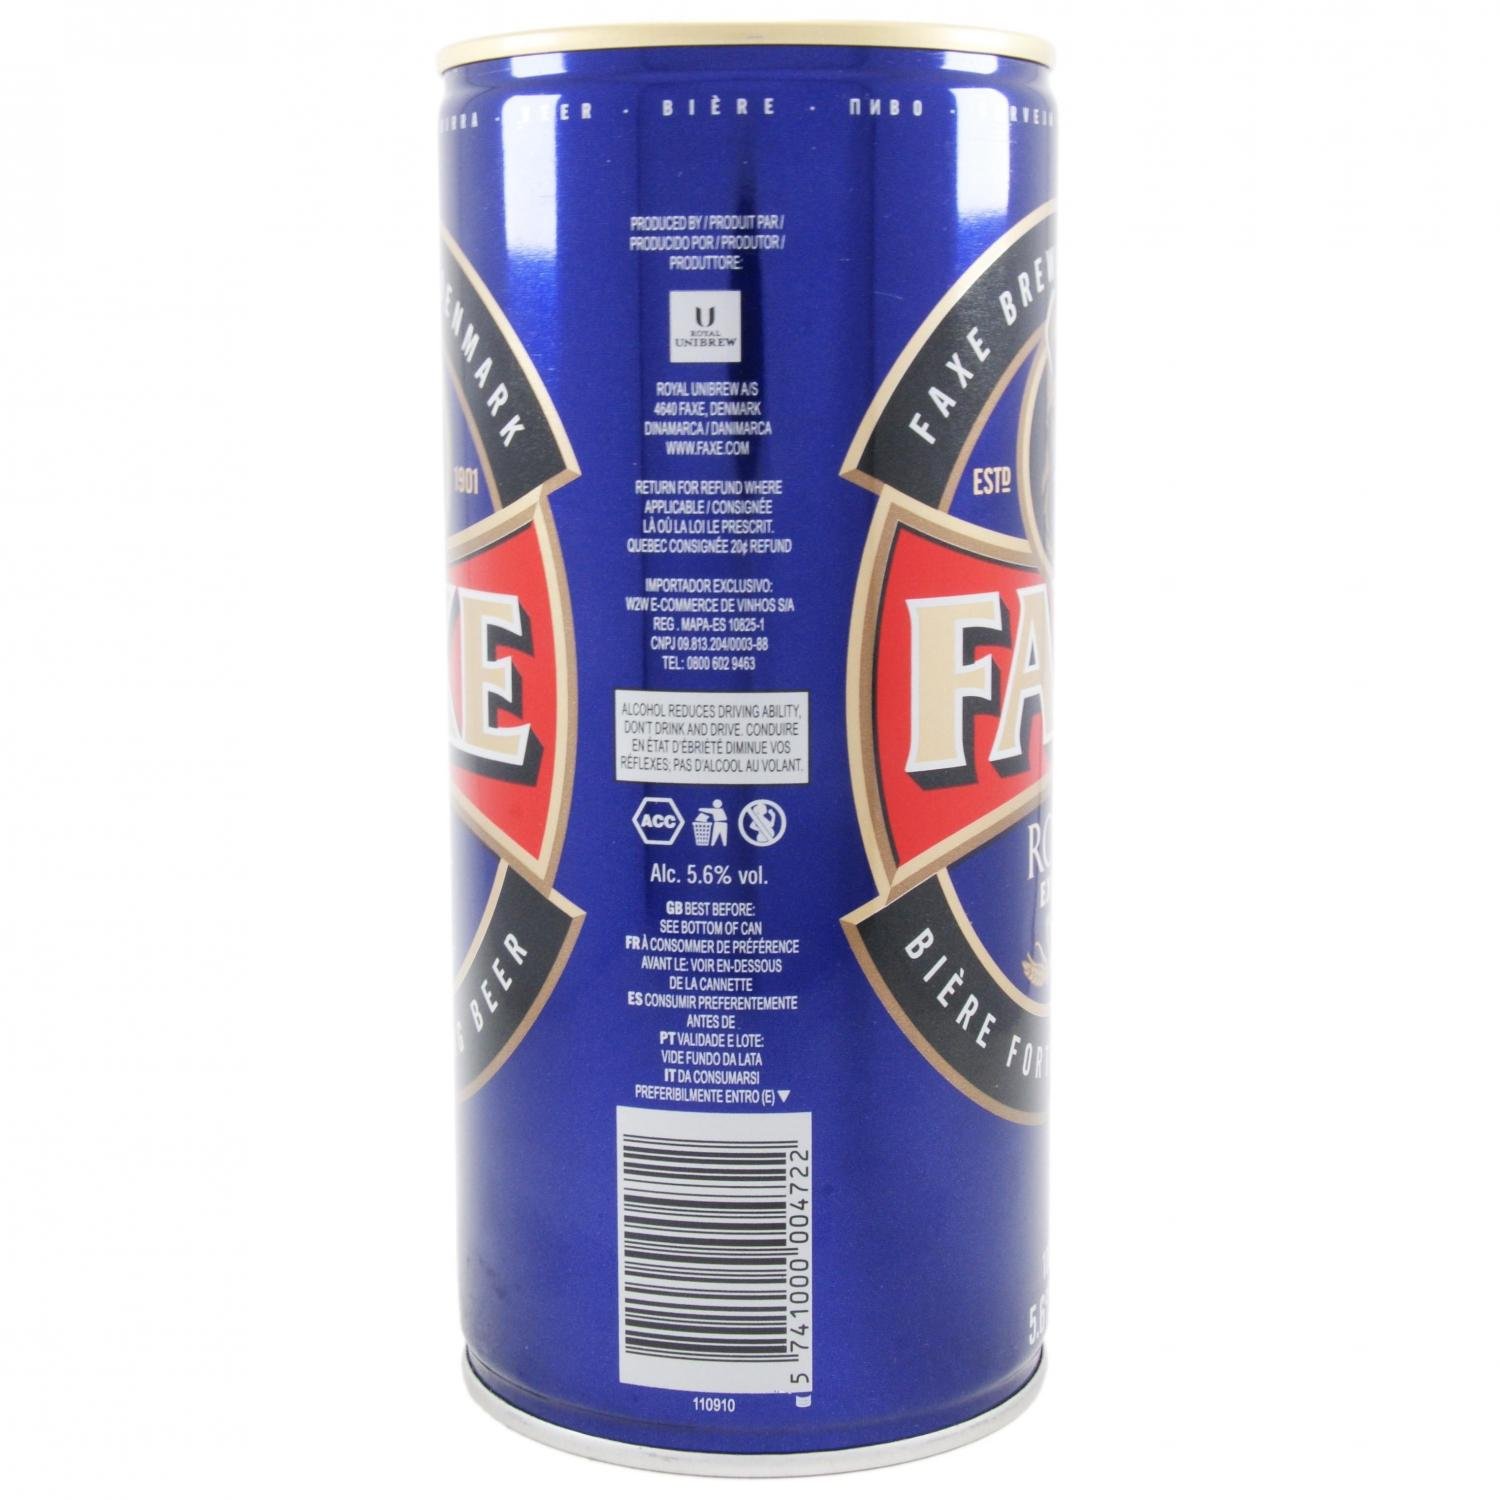 Пиво Faxe Royal Export, светлое, 5,6%, ж/б, 1 л (582255) - фото 3